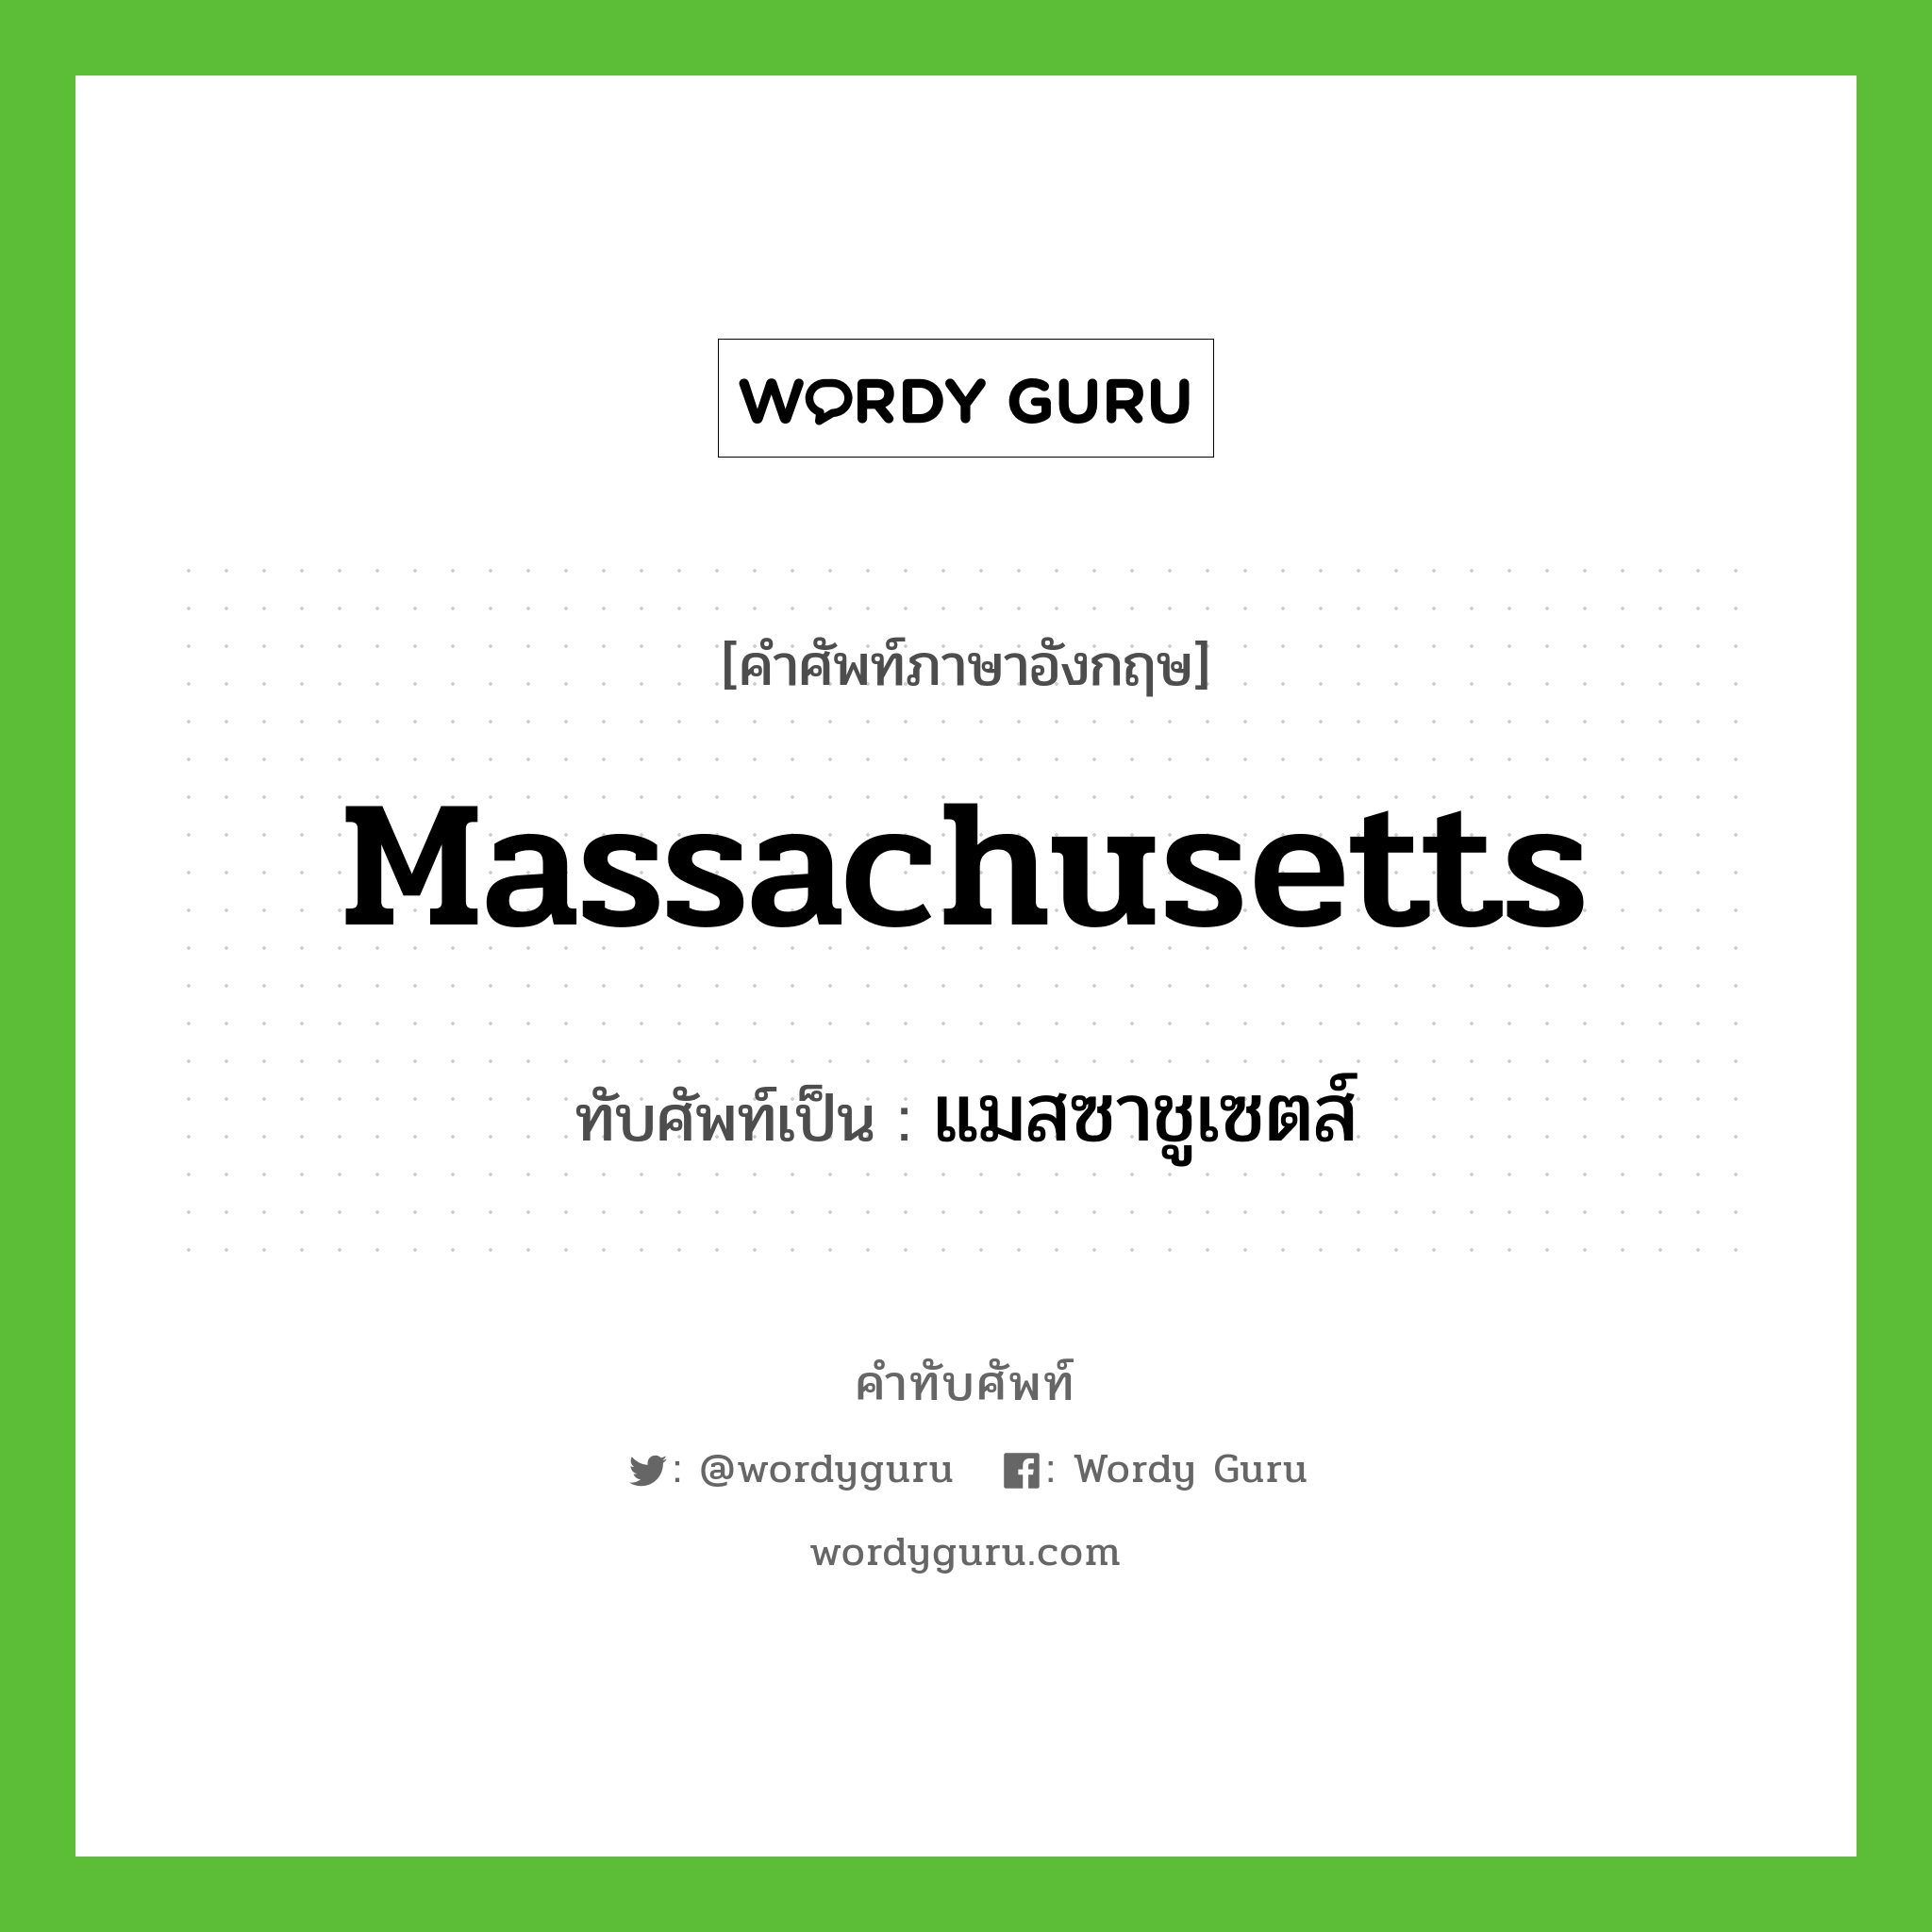 Massachusetts เขียนเป็นคำไทยว่าอะไร?, คำศัพท์ภาษาอังกฤษ Massachusetts ทับศัพท์เป็น แมสซาชูเซตส์